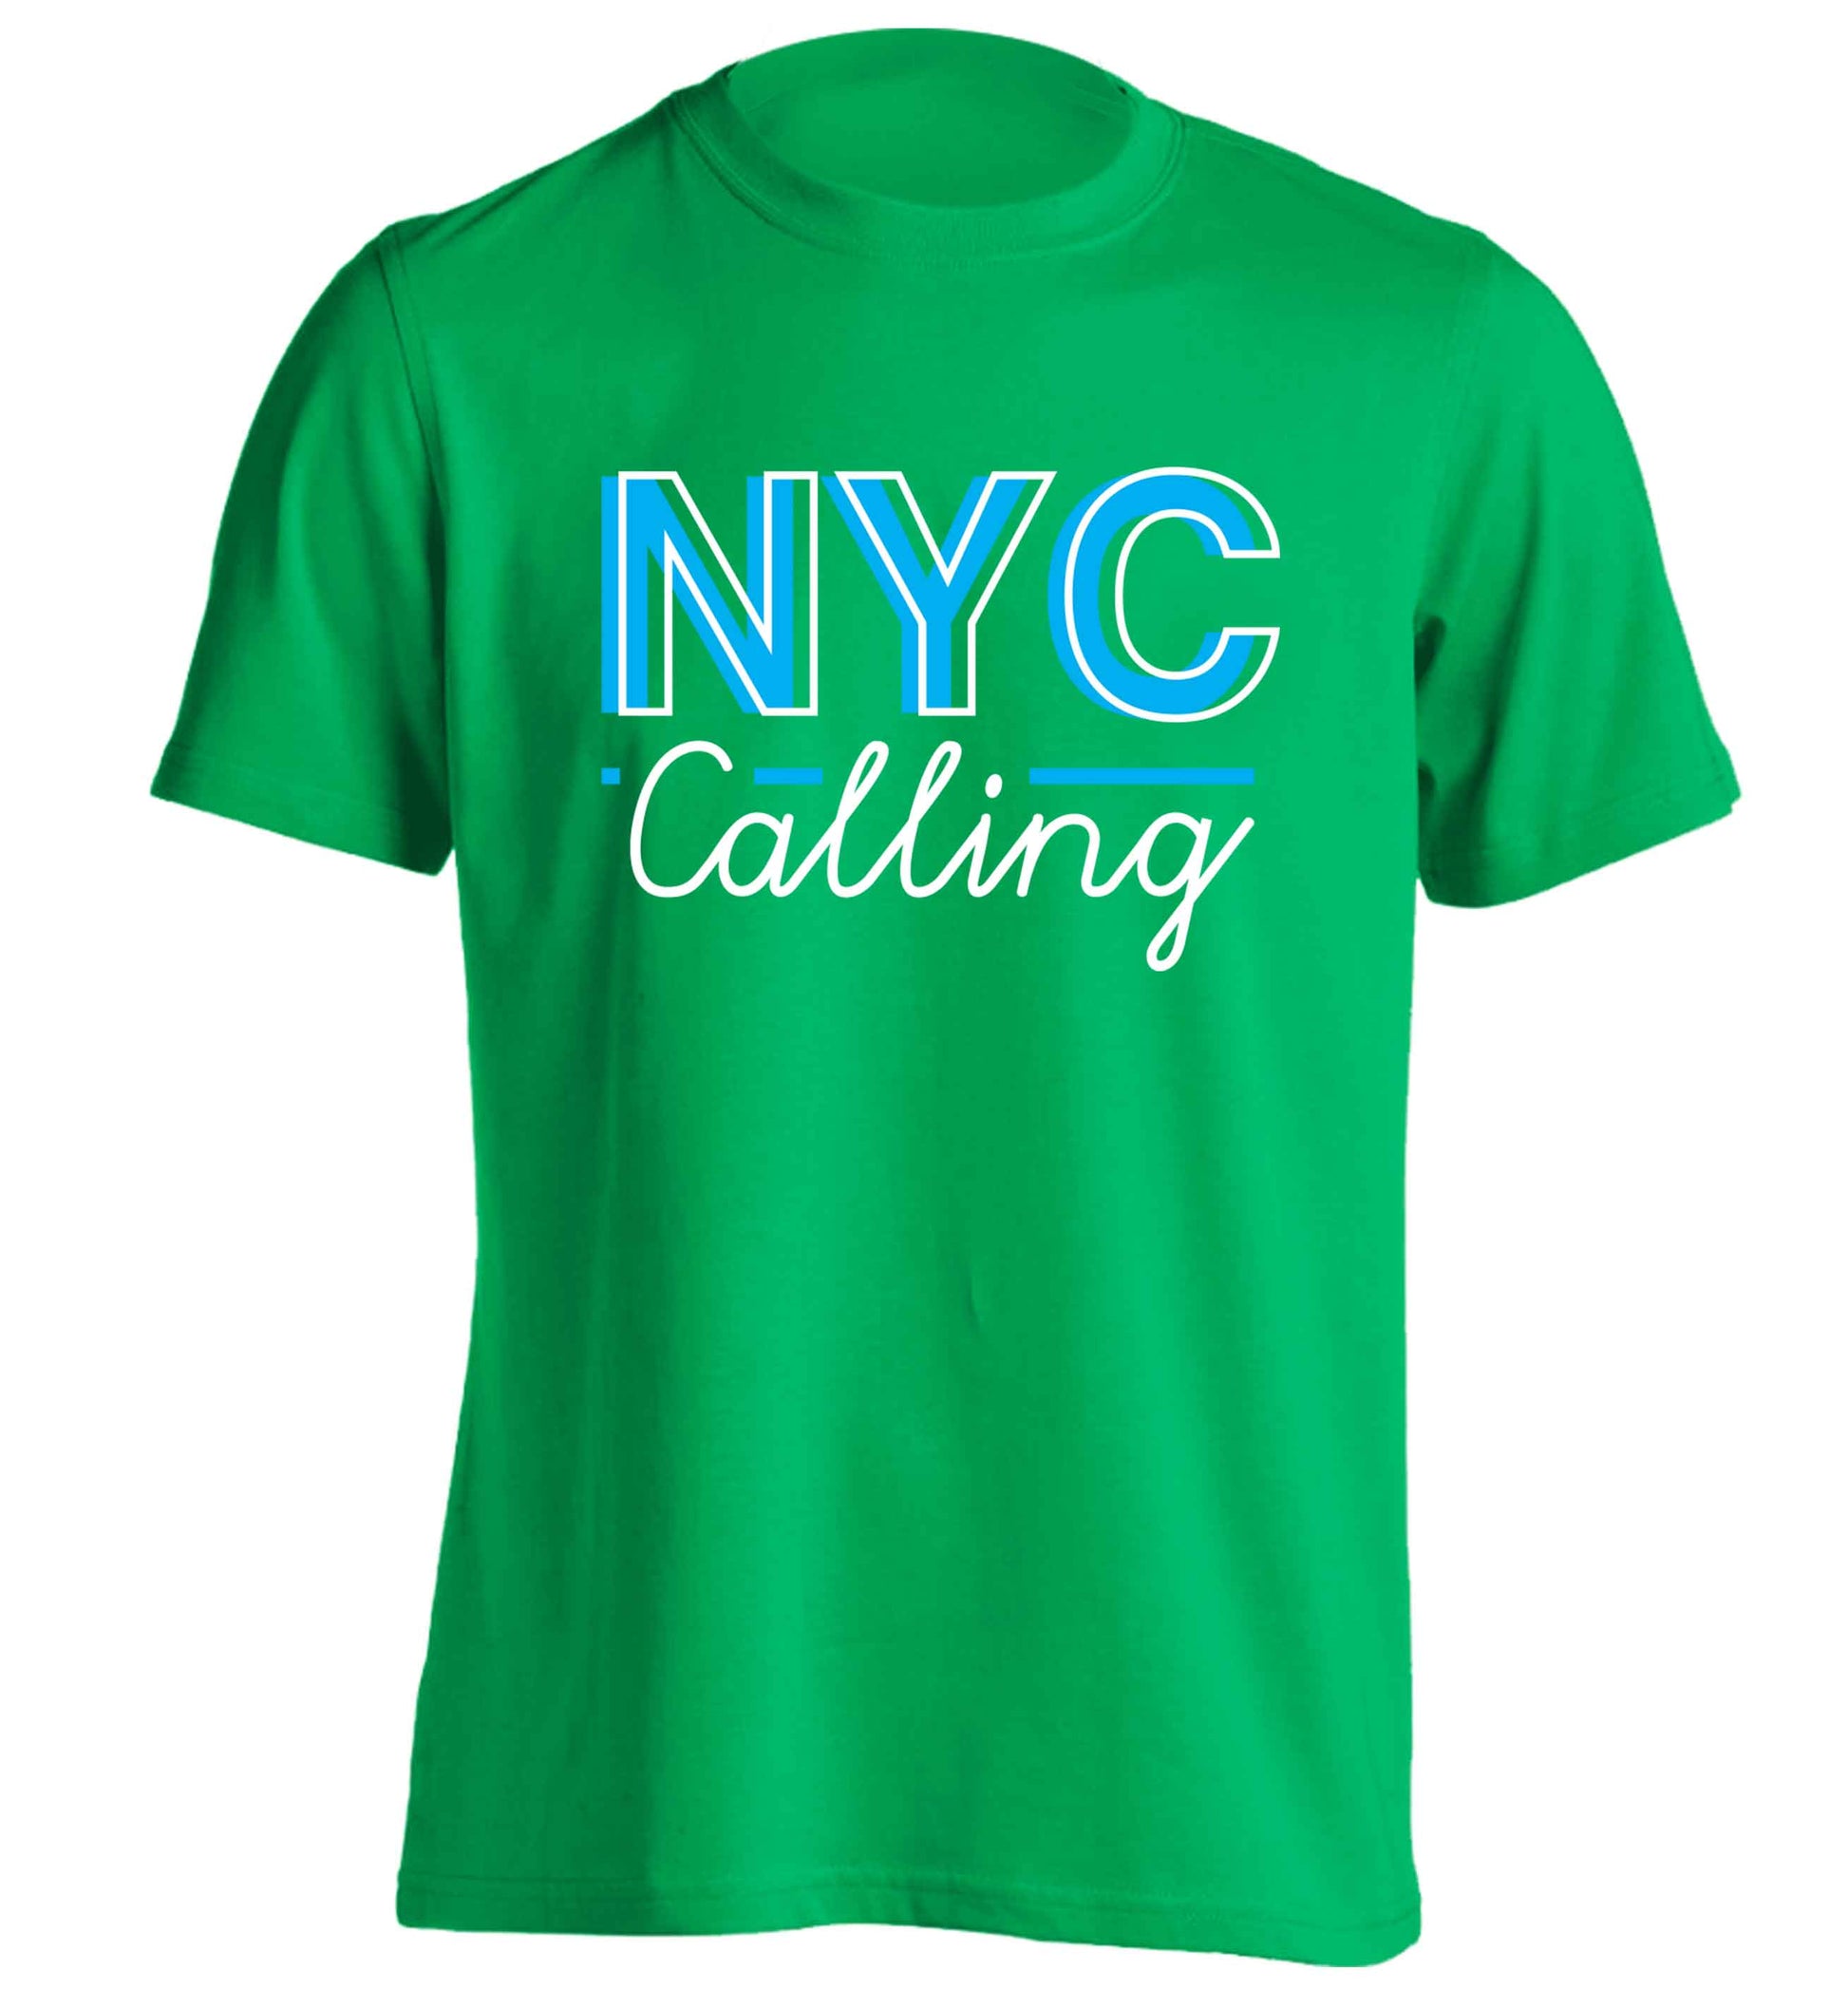 NYC calling adults unisex green Tshirt 2XL